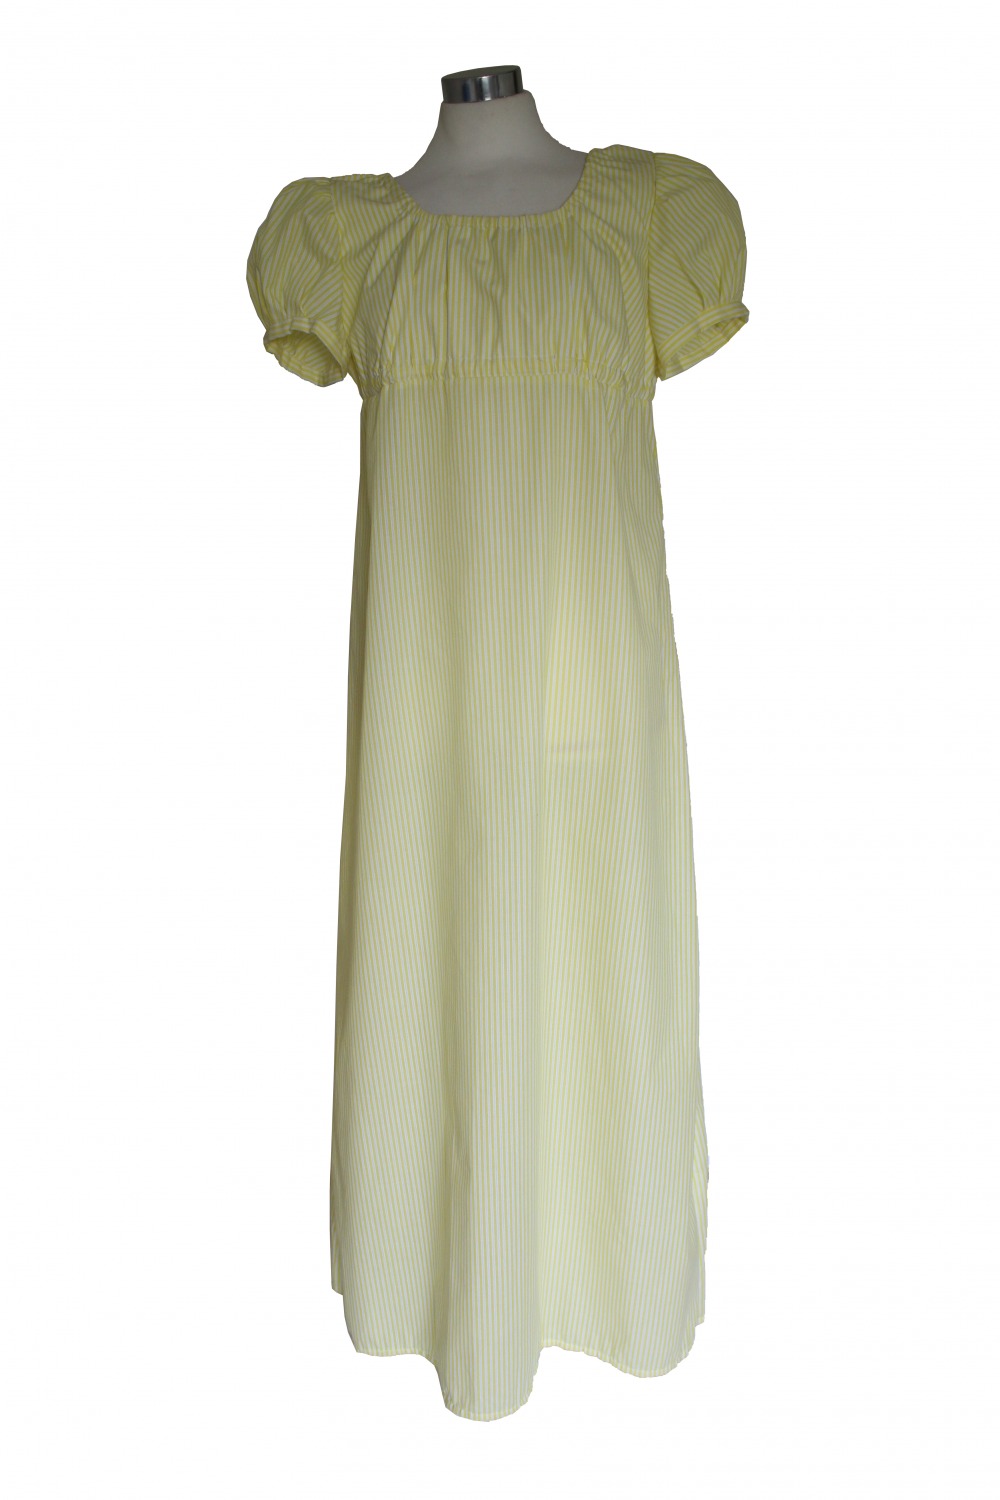 Ladies 18th 19th Century Regency Jane Austen Costume Size 16 - 18 Image